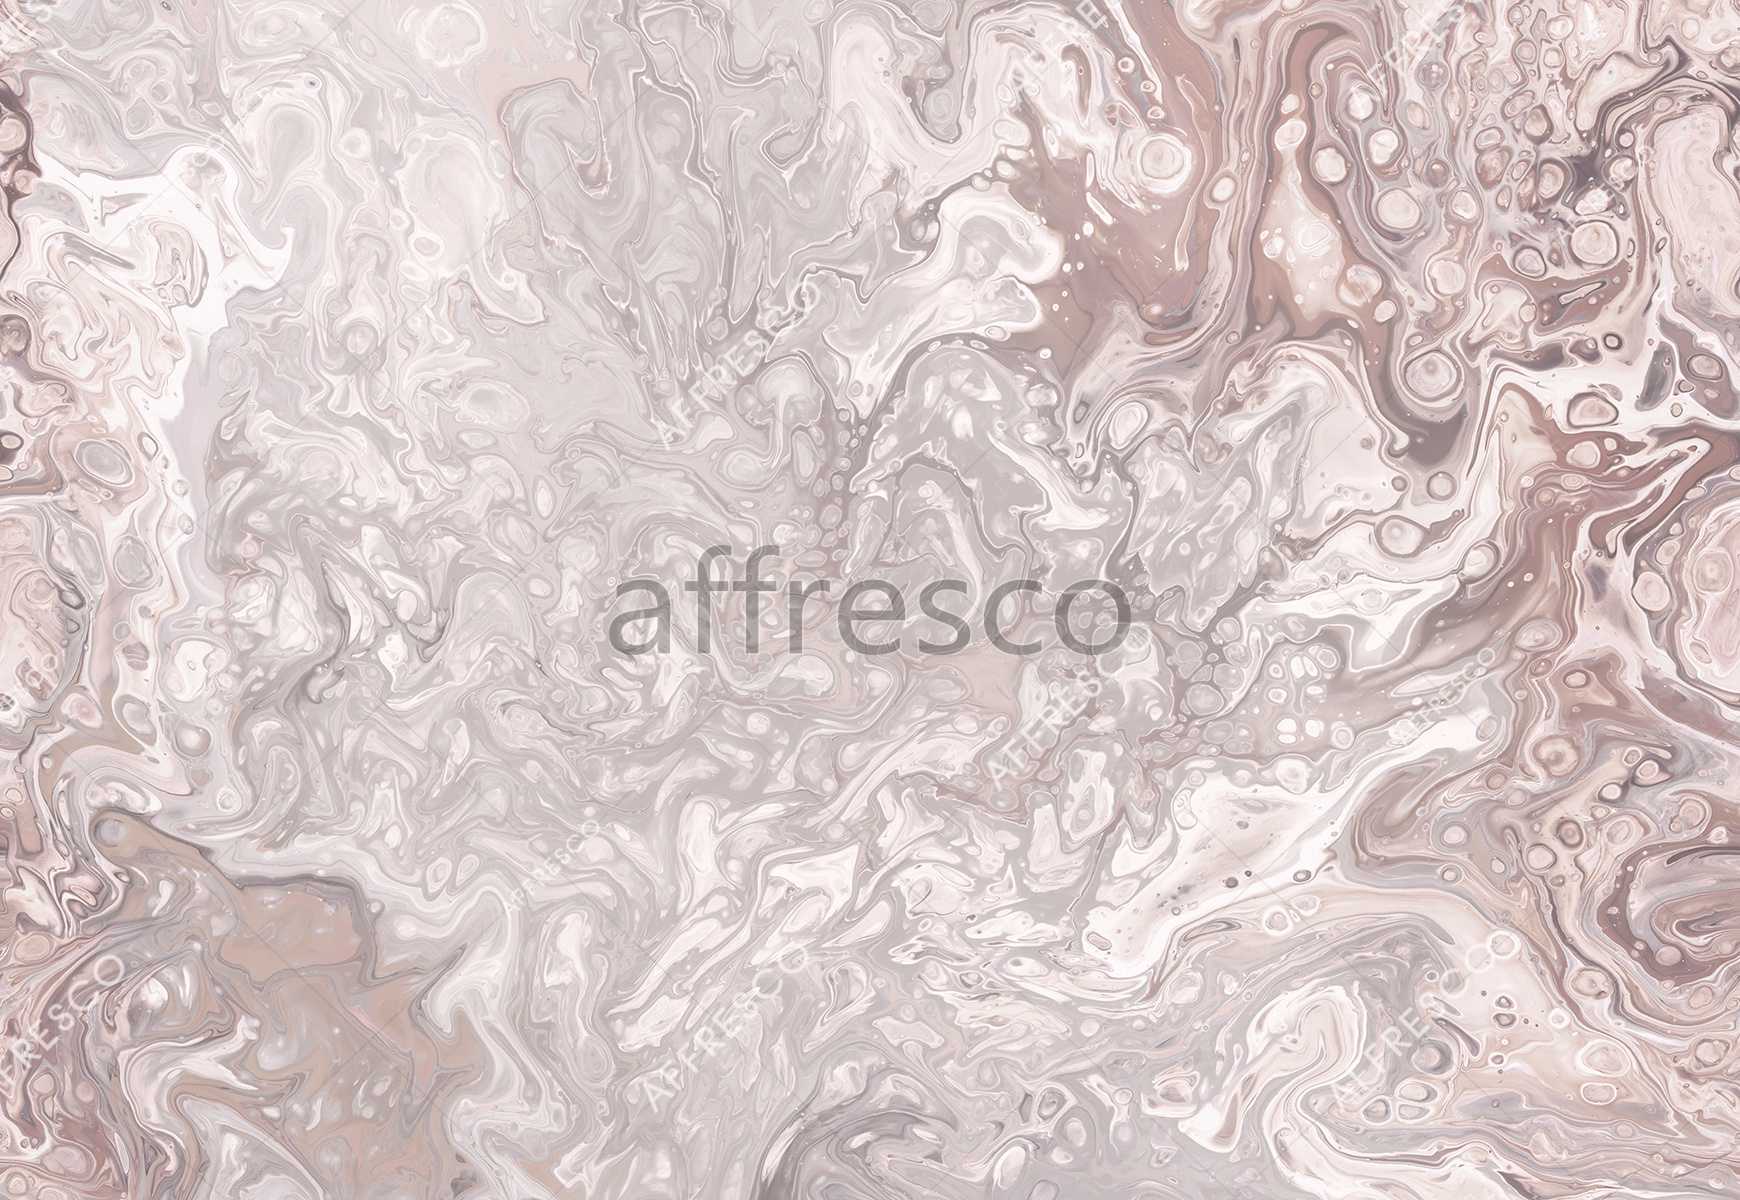 ID138703 | Textures |  | Affresco Factory